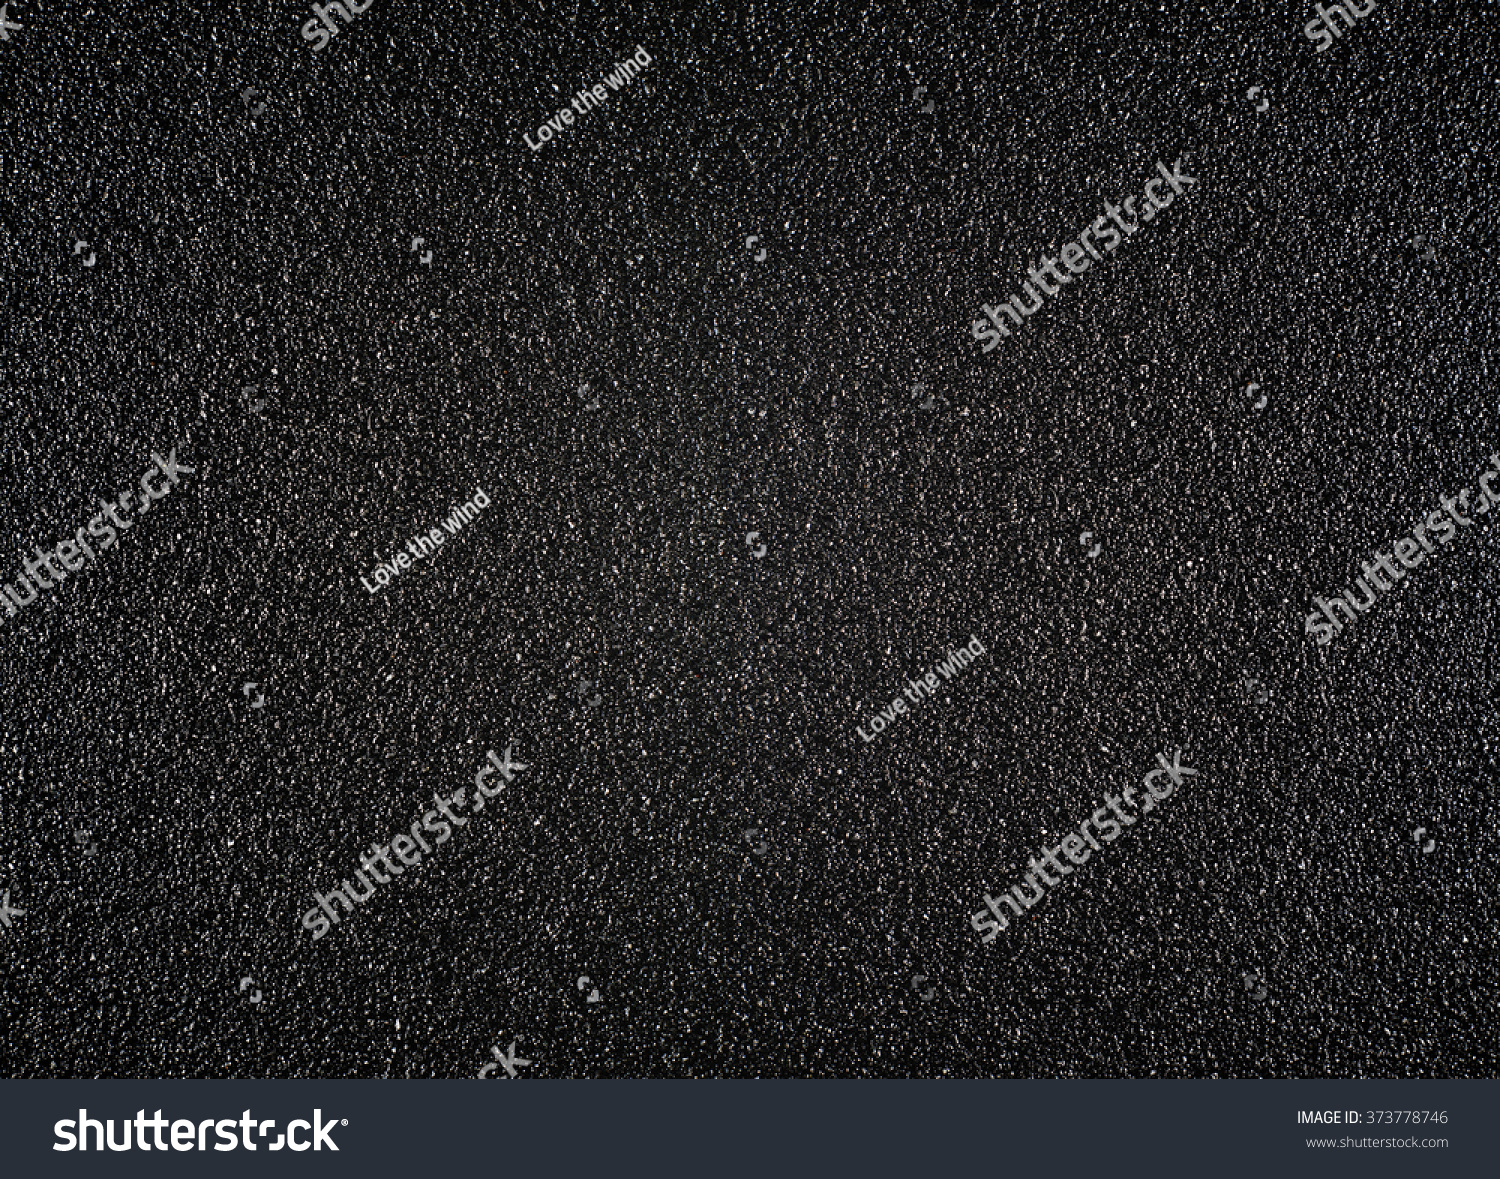 Black asphalt texture background #373778746